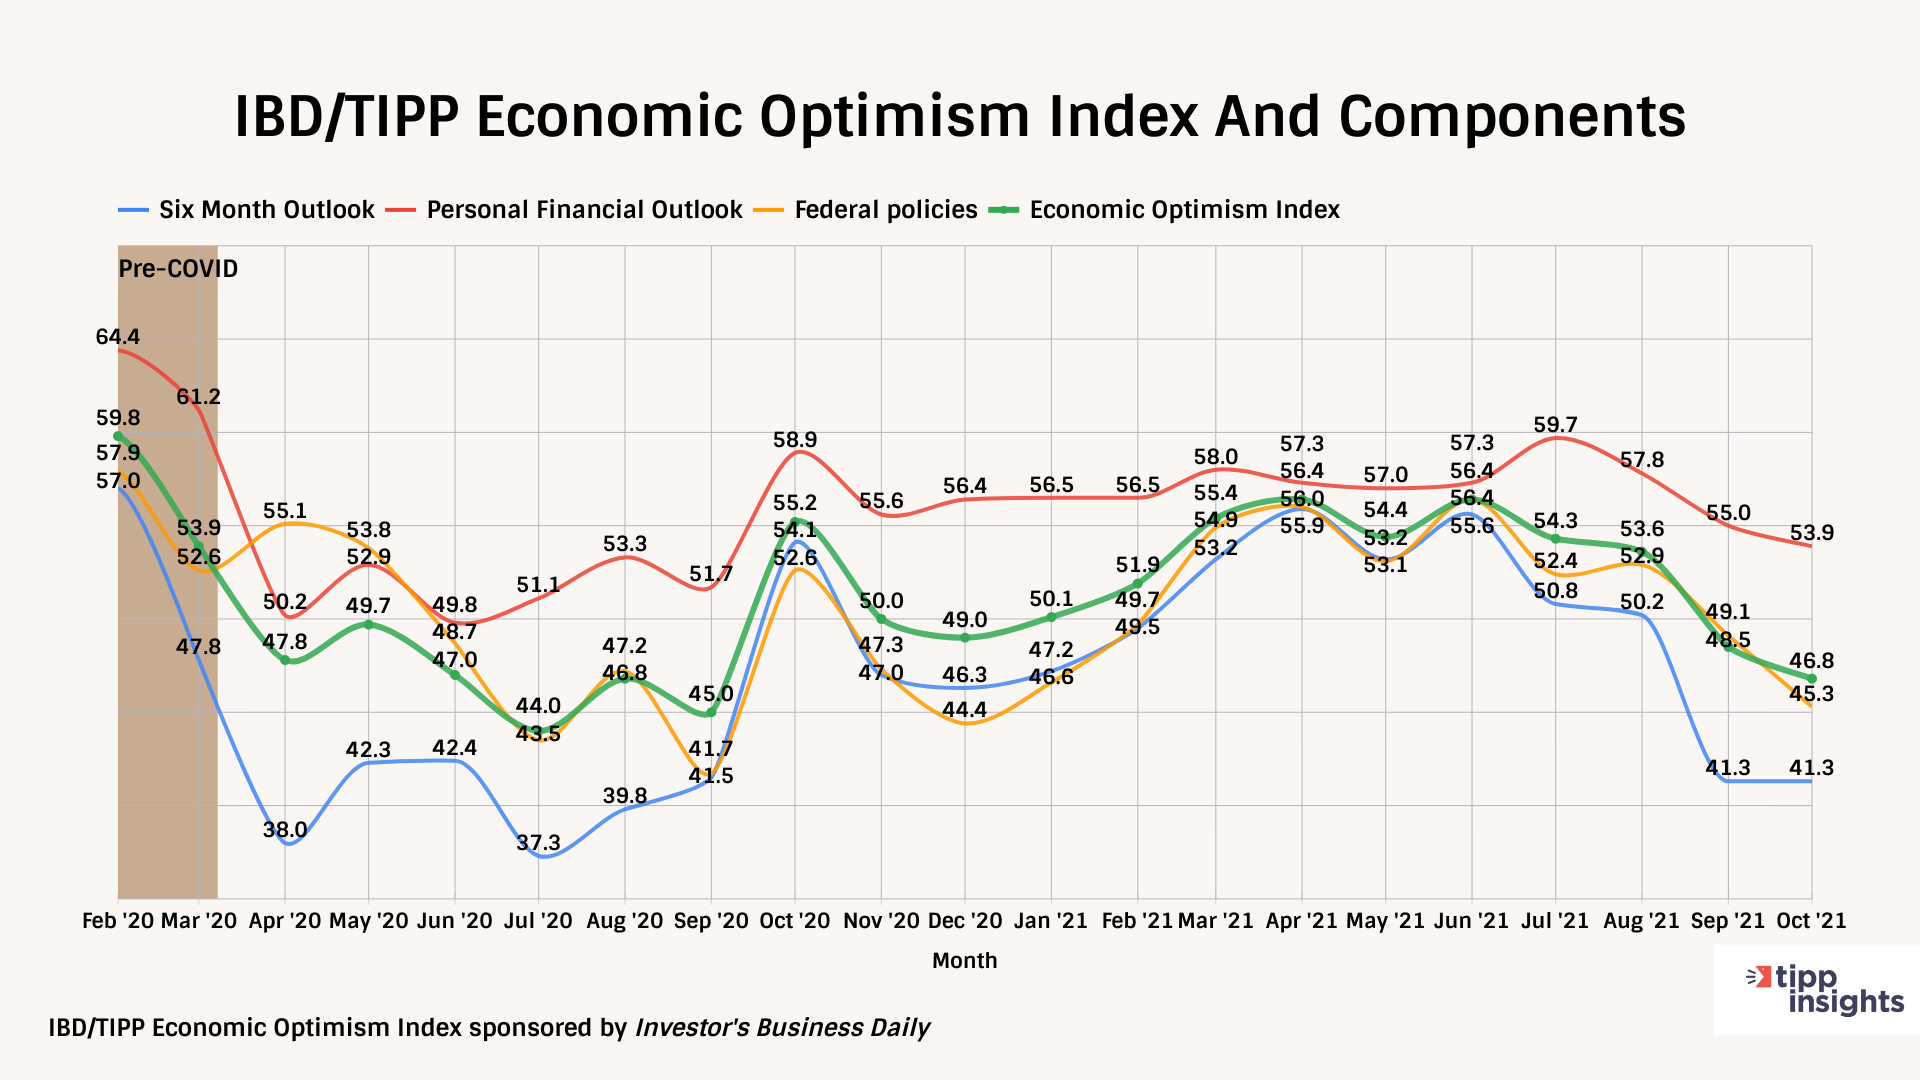 IBD/TIPP Economic Optimism Tracking chart February 2020-October 2021